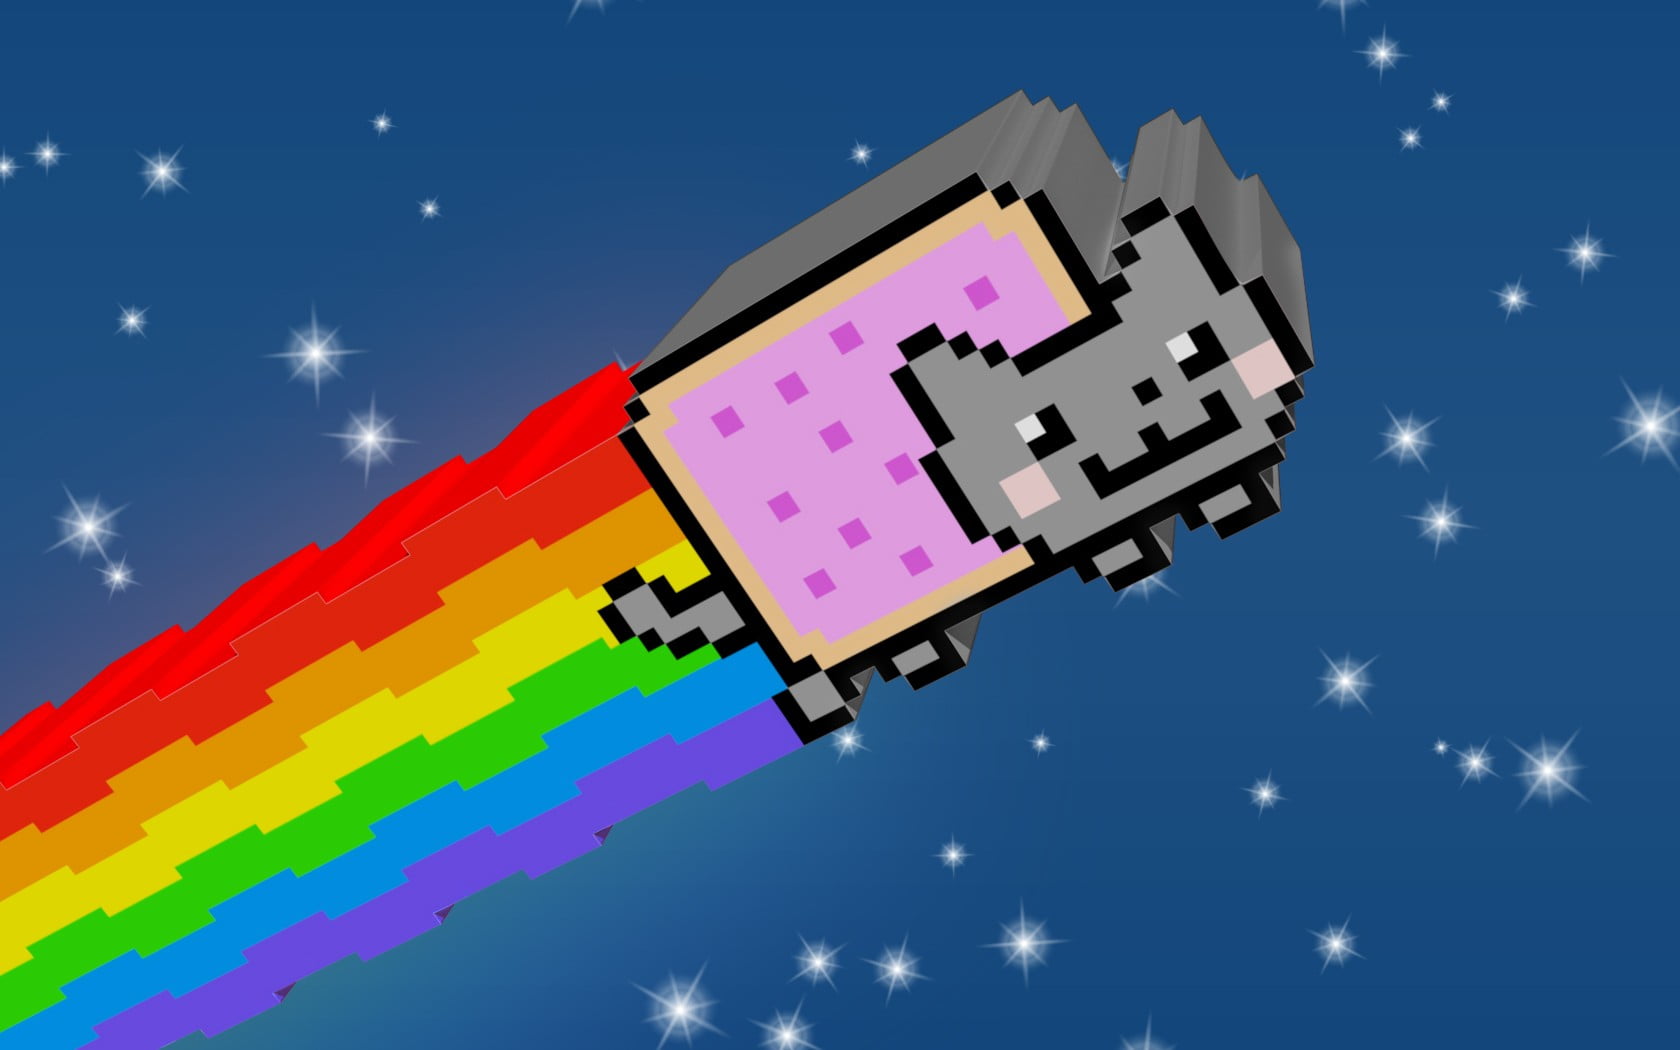 Nyan Cat - HD Wallpaper 